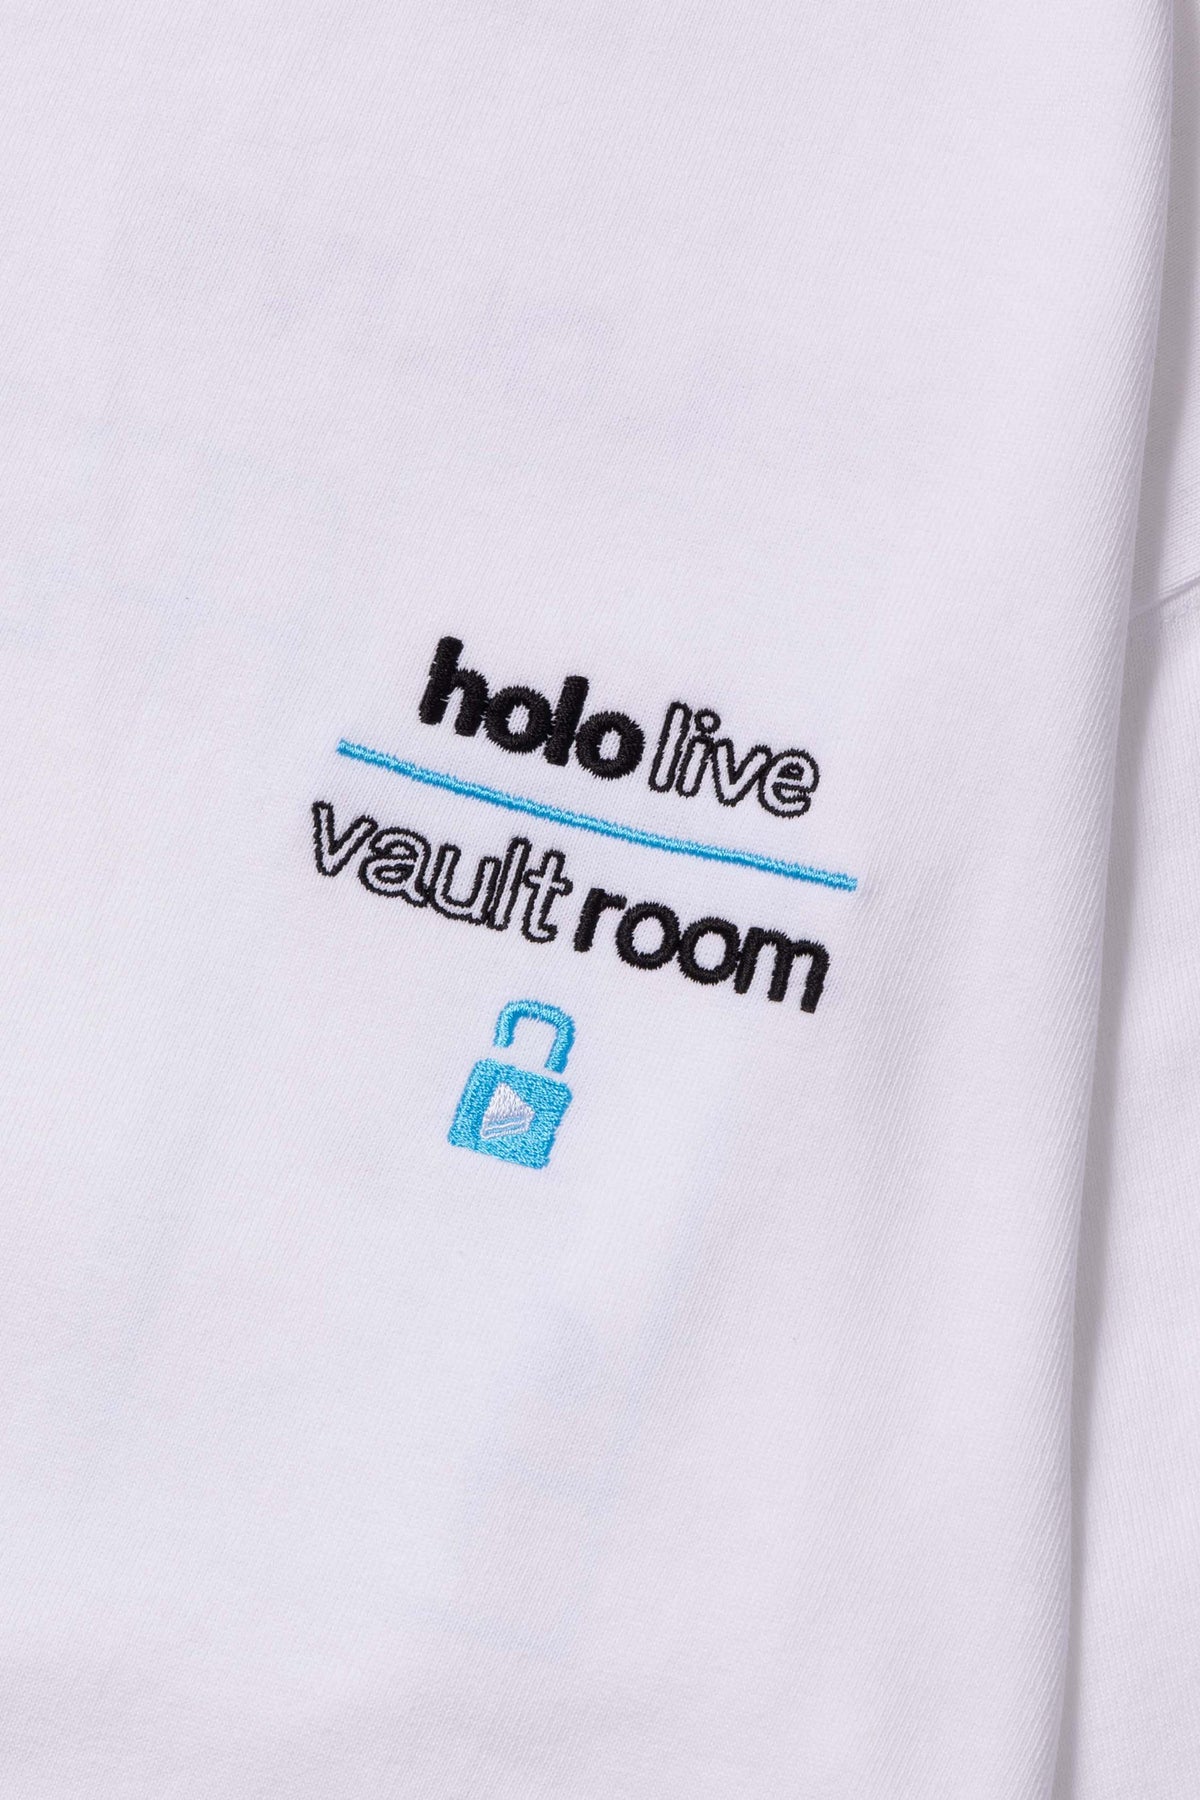 L vaultroom HOSHIMACHI SUISEI TEE ブラック - Tシャツ/カットソー ...